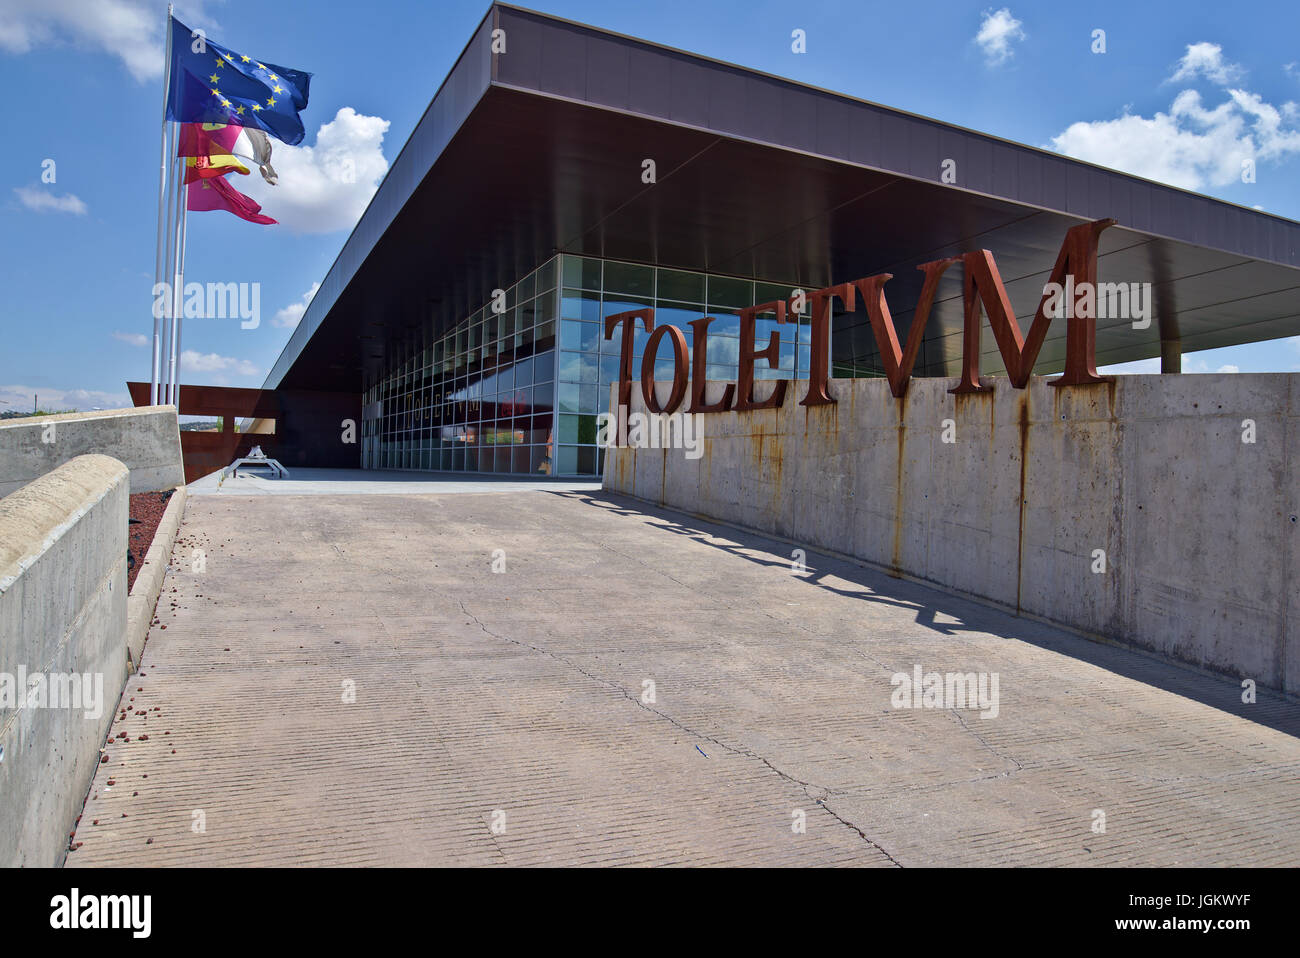 Toledo's Toletum tourist center. Unsuccessful public building construction unused nowadays. Image taken in Toledo, July 2017 Stock Photo